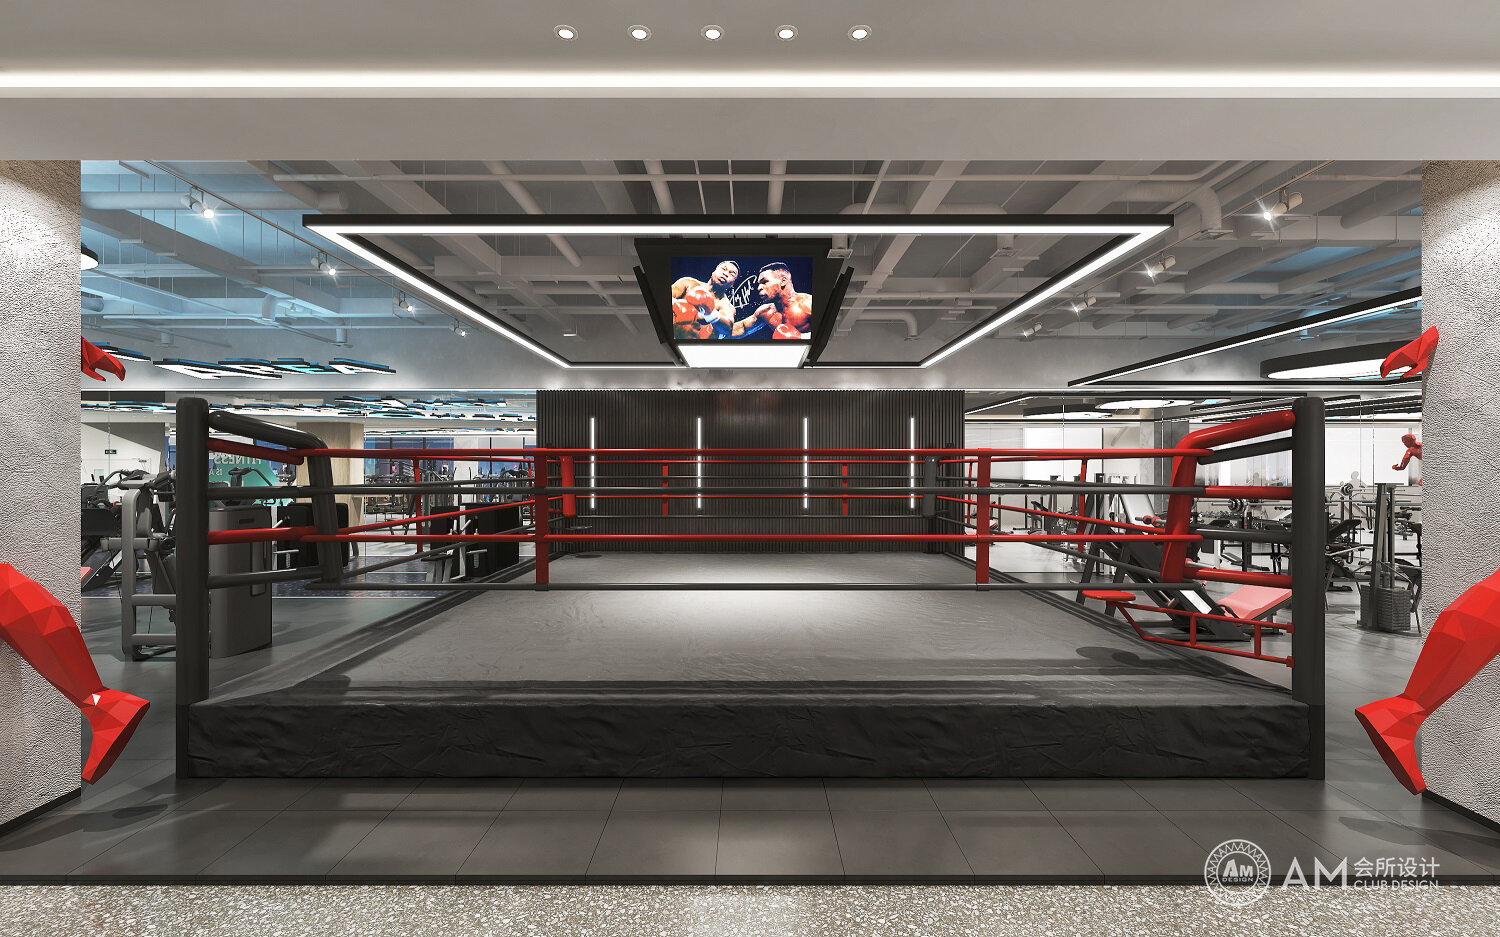 Am design | boxing ring design of Hefei Gymnasium